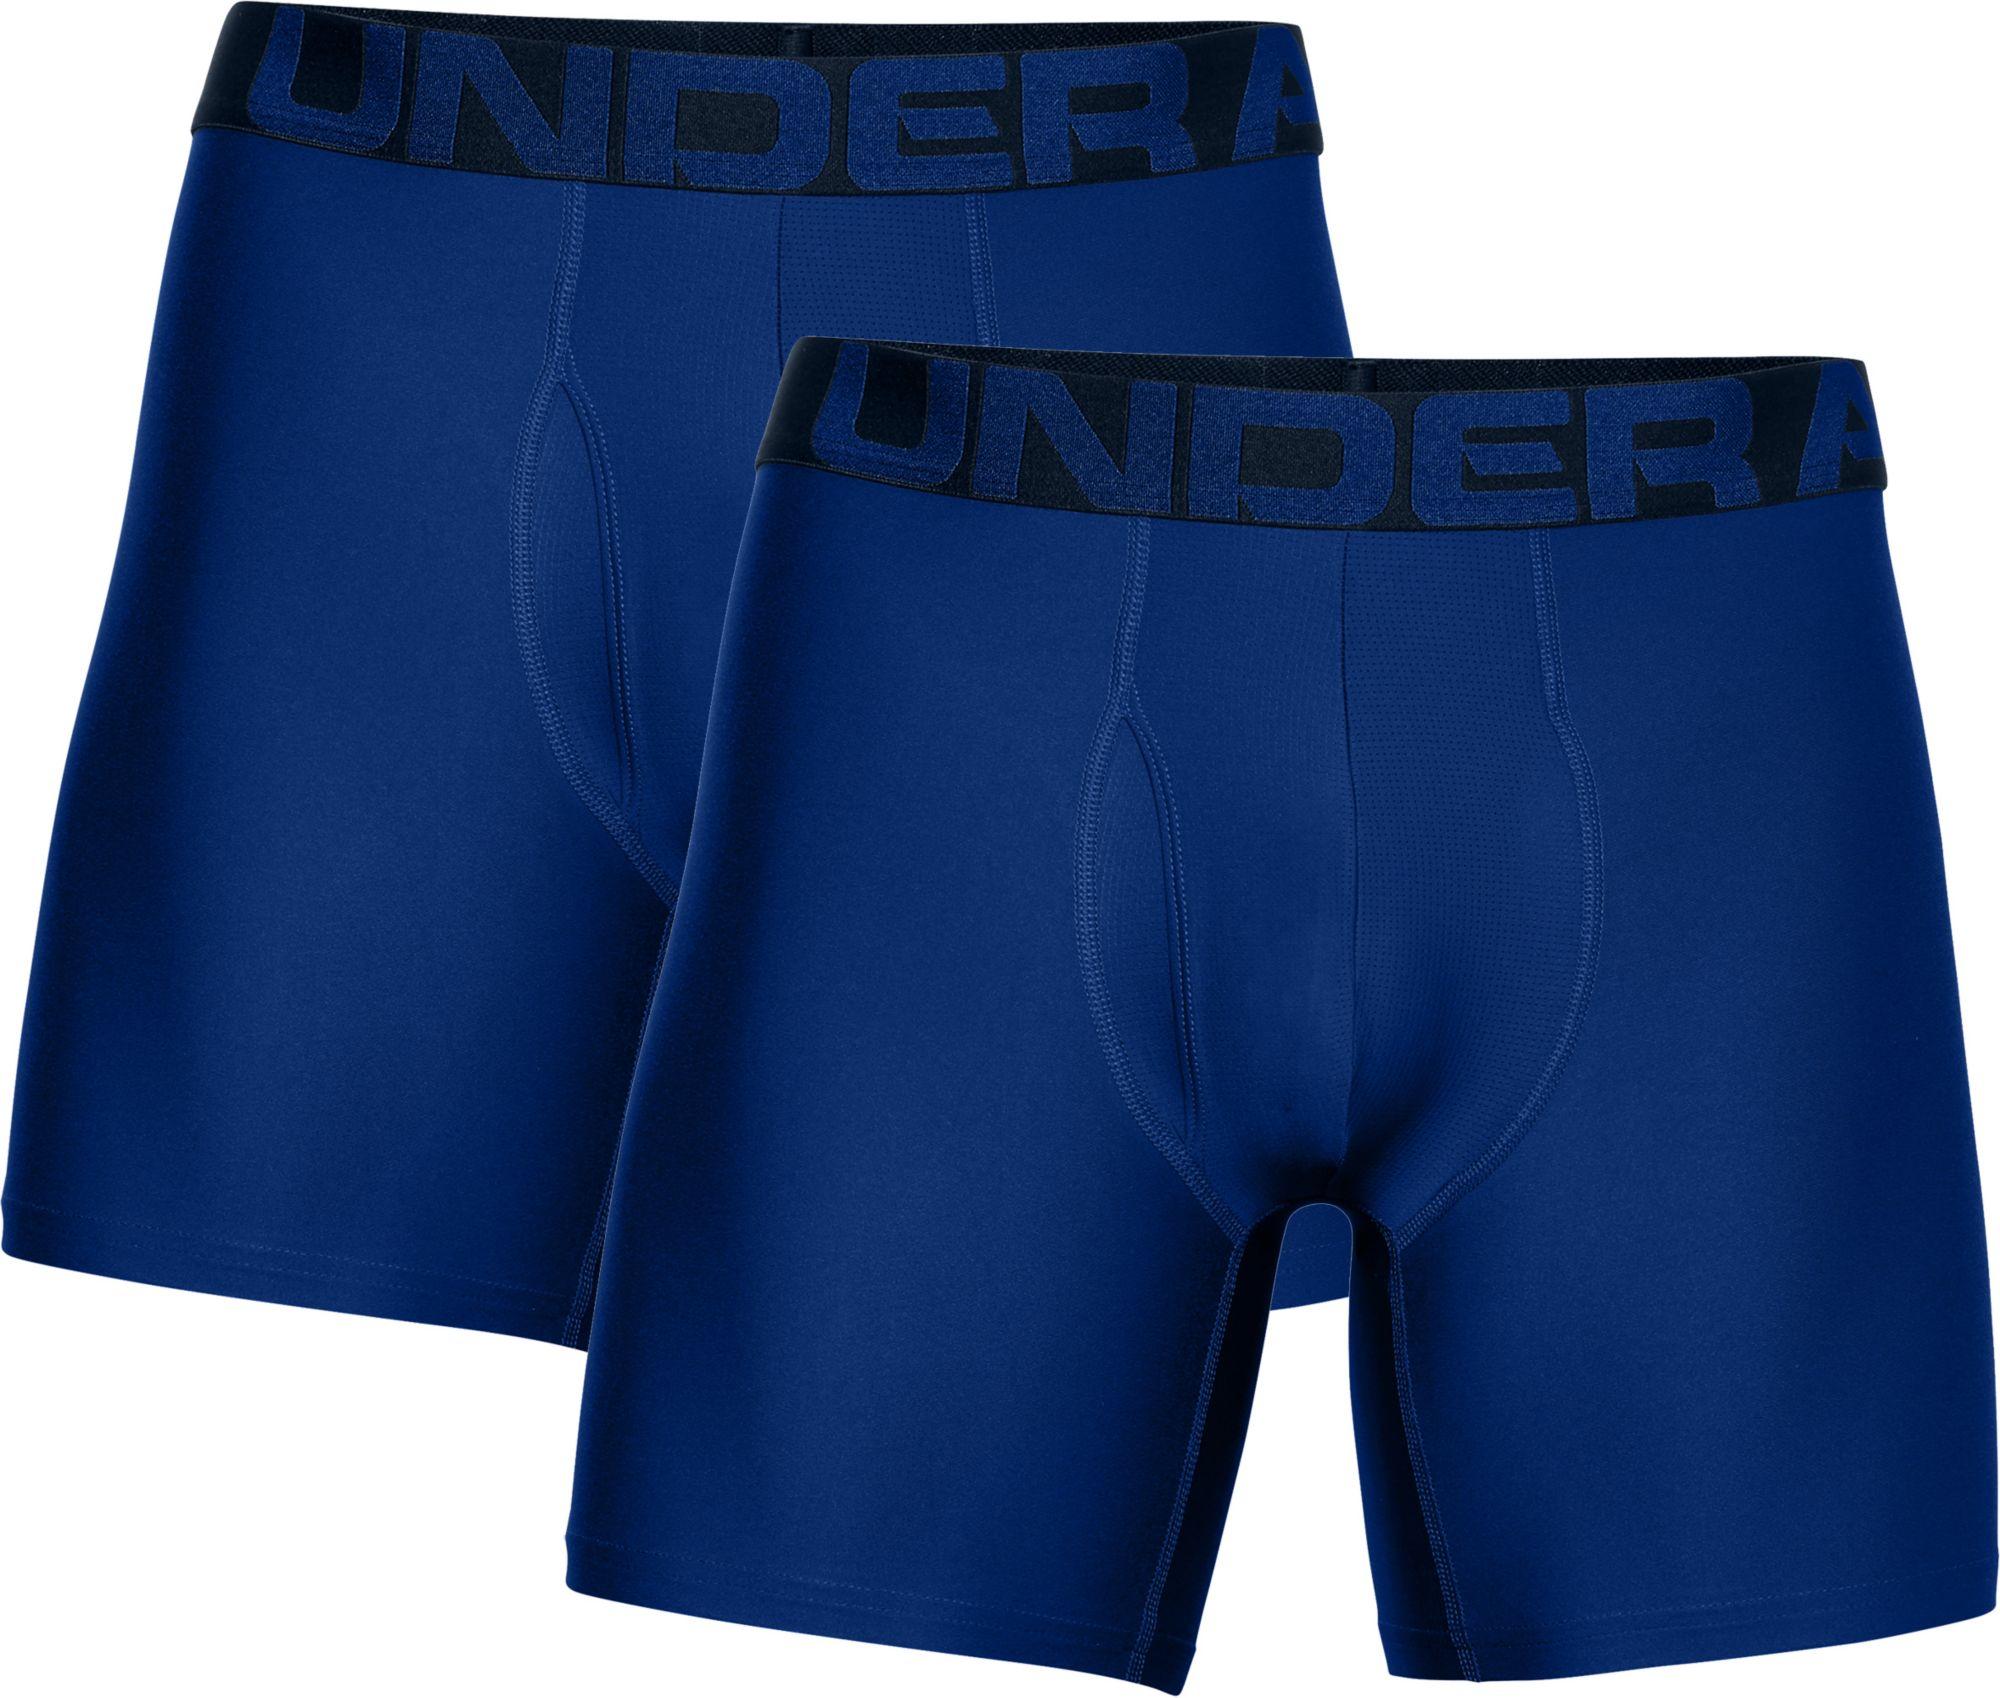 Under Armour Tech 6'' Boxerjock Boxer Briefs 2-pack in Blue for Men - Lyst